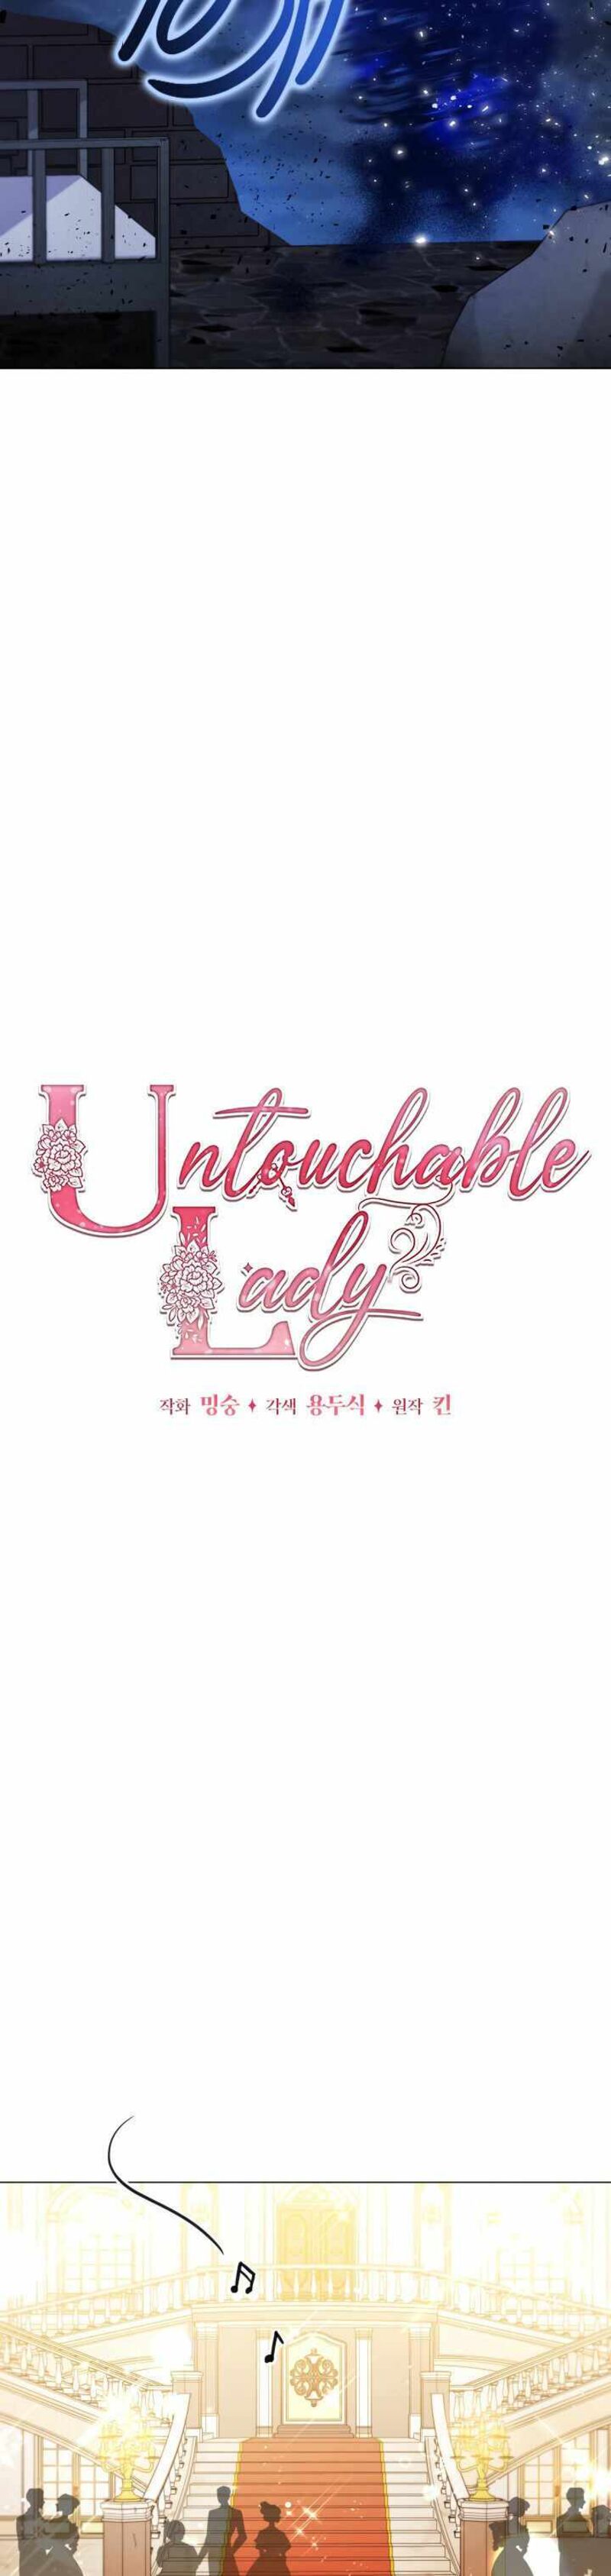 untouchable_lady_11_14